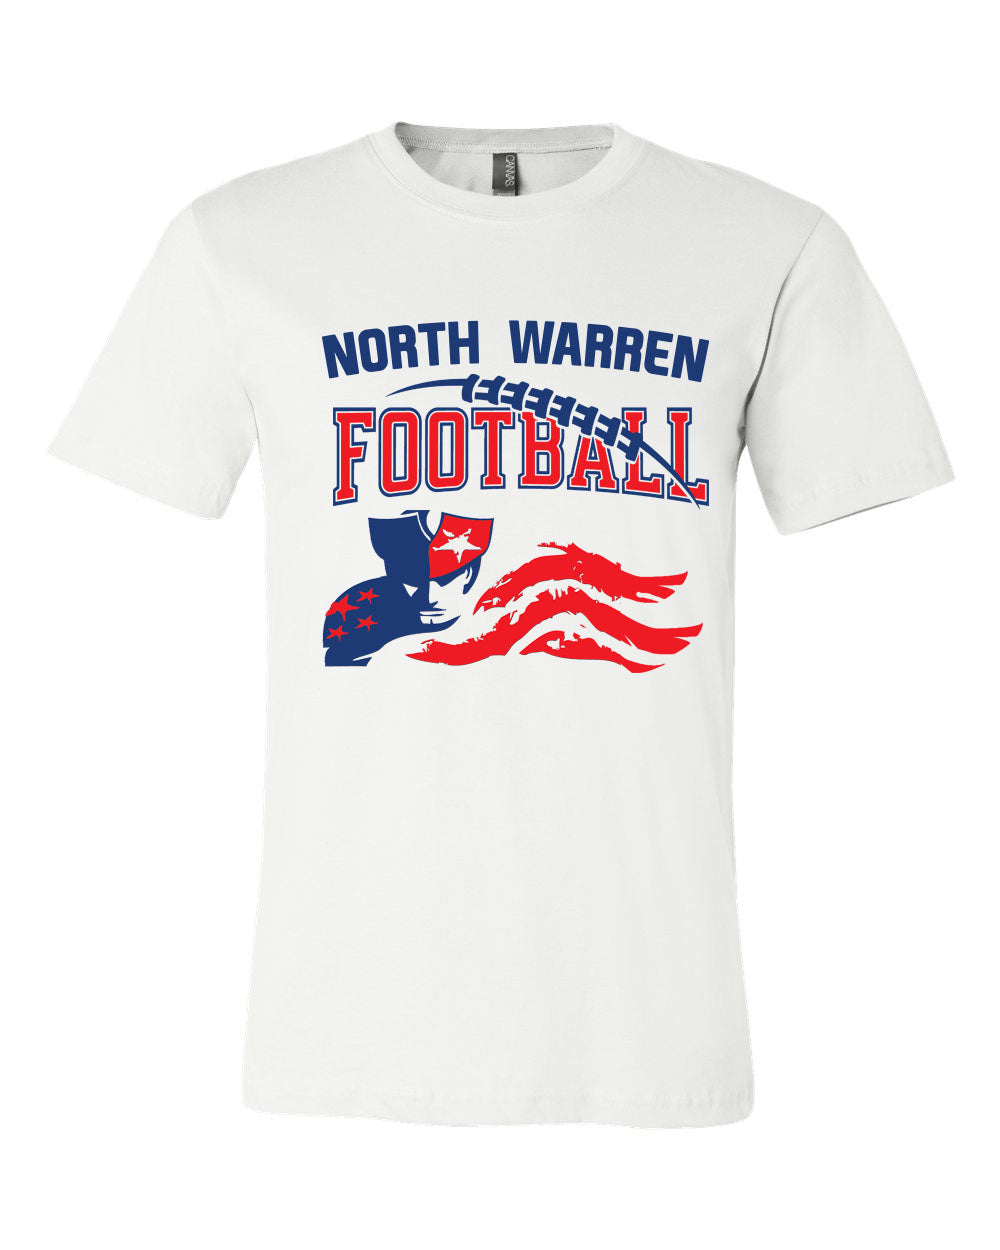 NW Football Design 6 T-Shirt